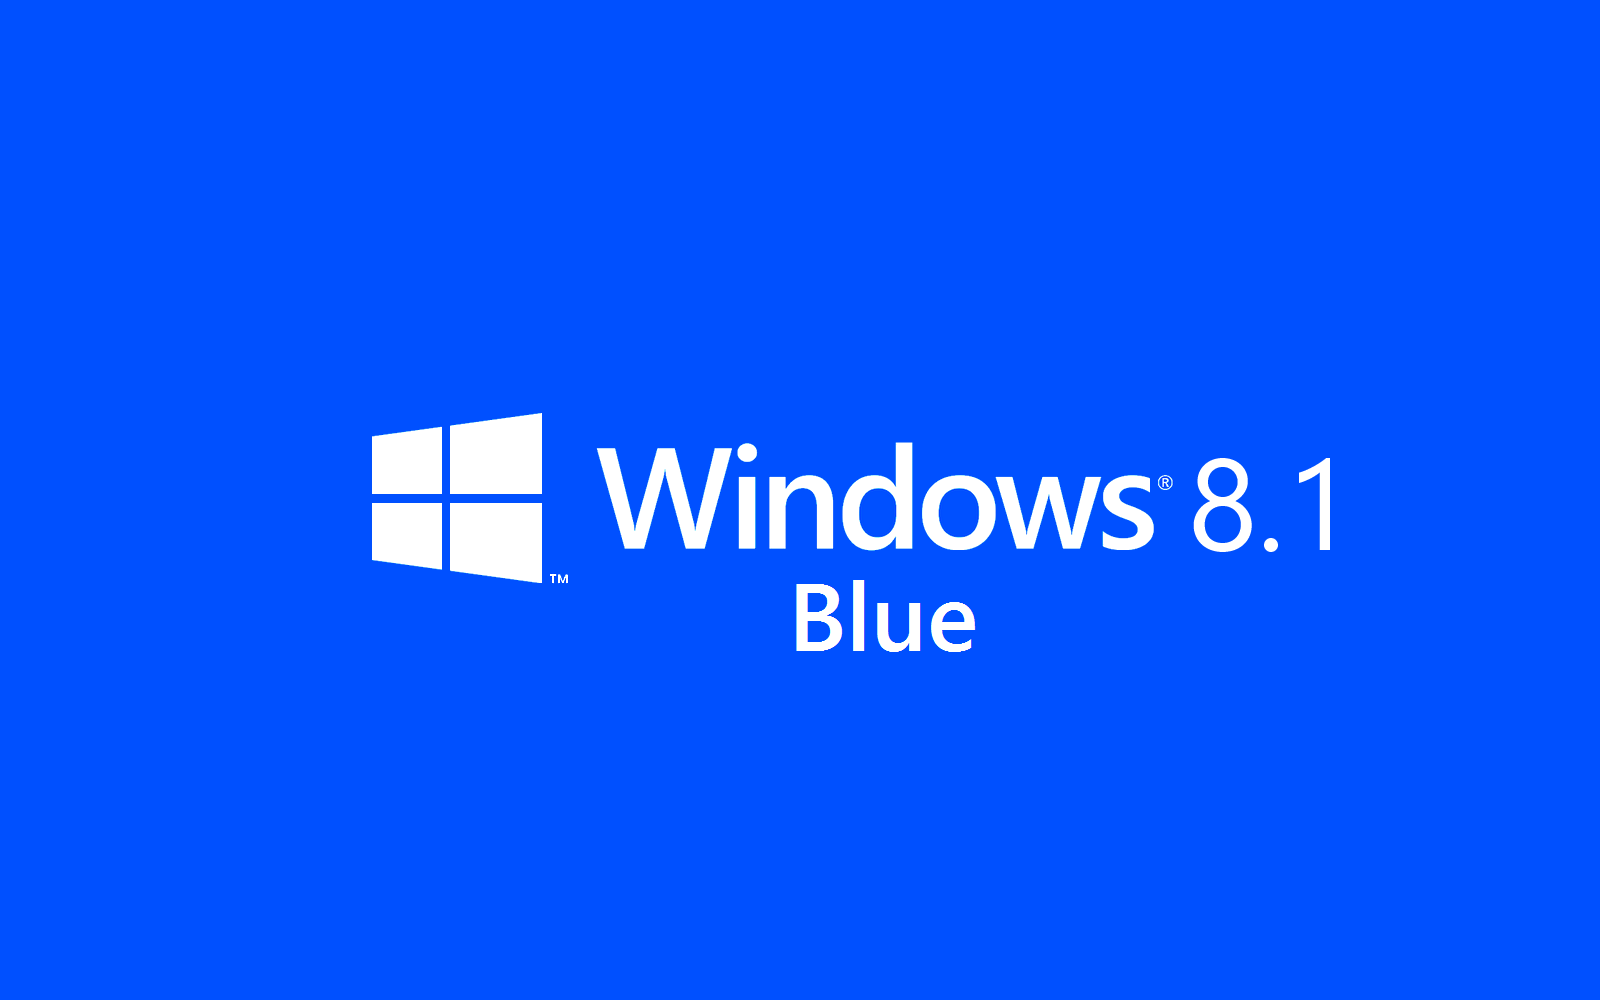 Windows mr. Windows 8.1. Винда 8.1. Операционная система Windows 8. Windows 8.1 логотип.